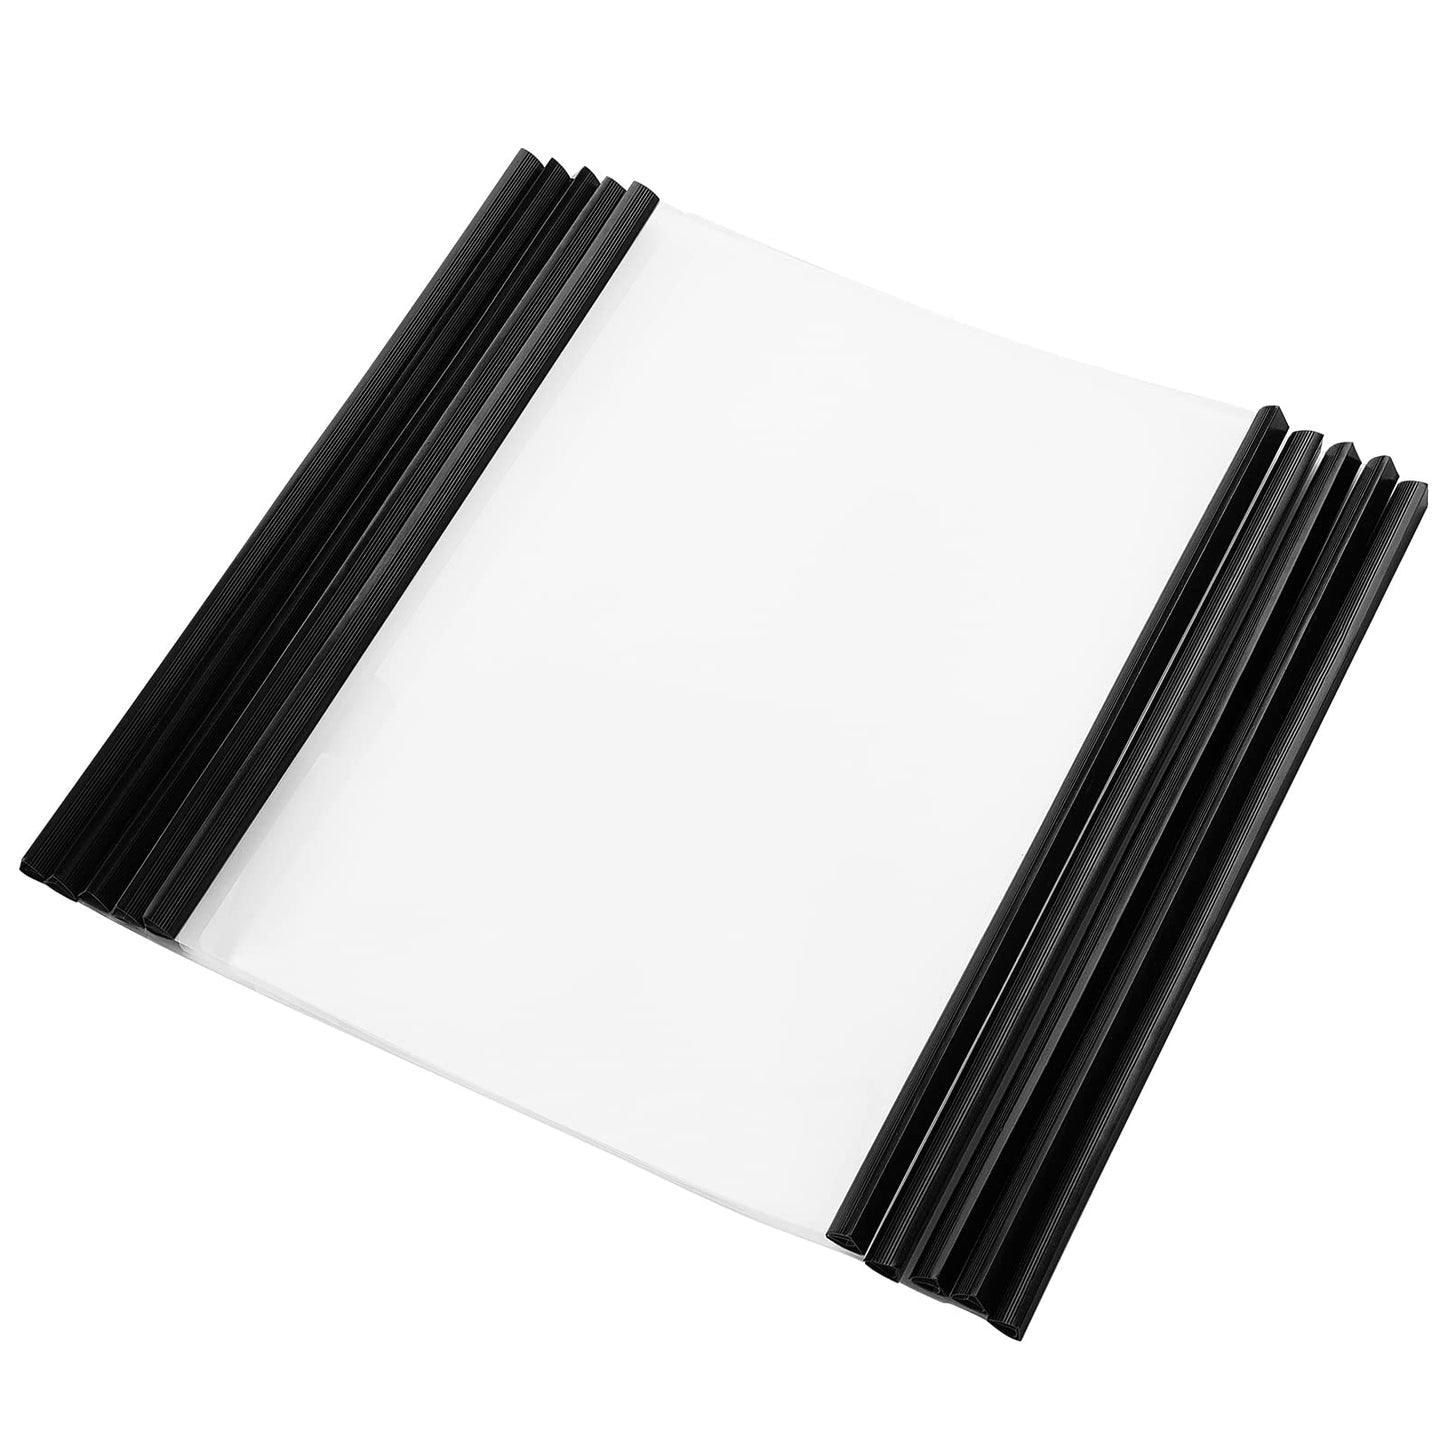 JOERSH 10Pcs Clear Report Covers with U-Type Sliding Bar, 40 Sheet Capacity, Resume Presentation File Clear Folders Organizer School Binder for A4 Size Paper, Black